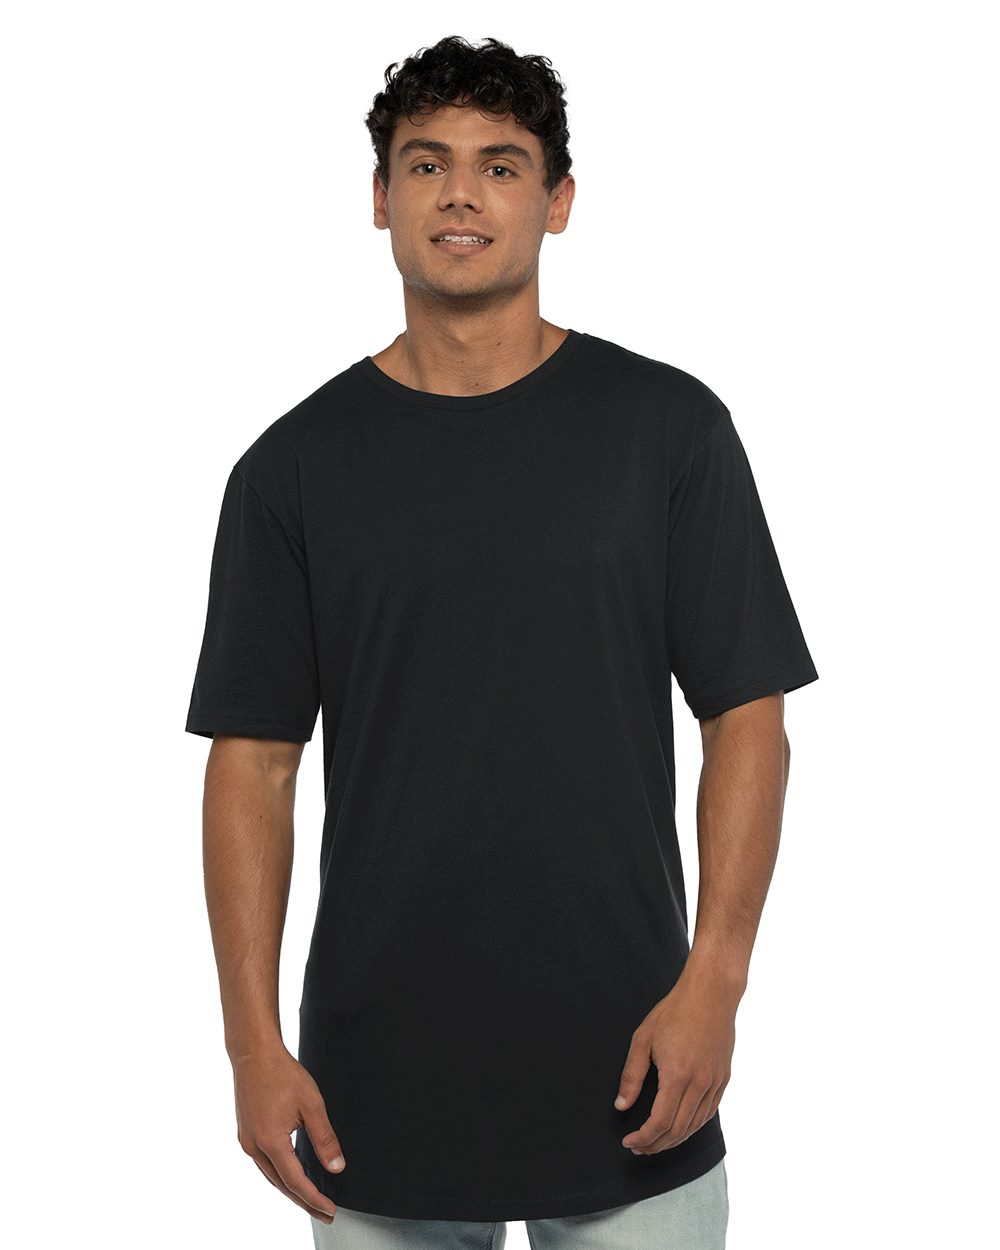 Next Level Black T Shirt | vlr.eng.br